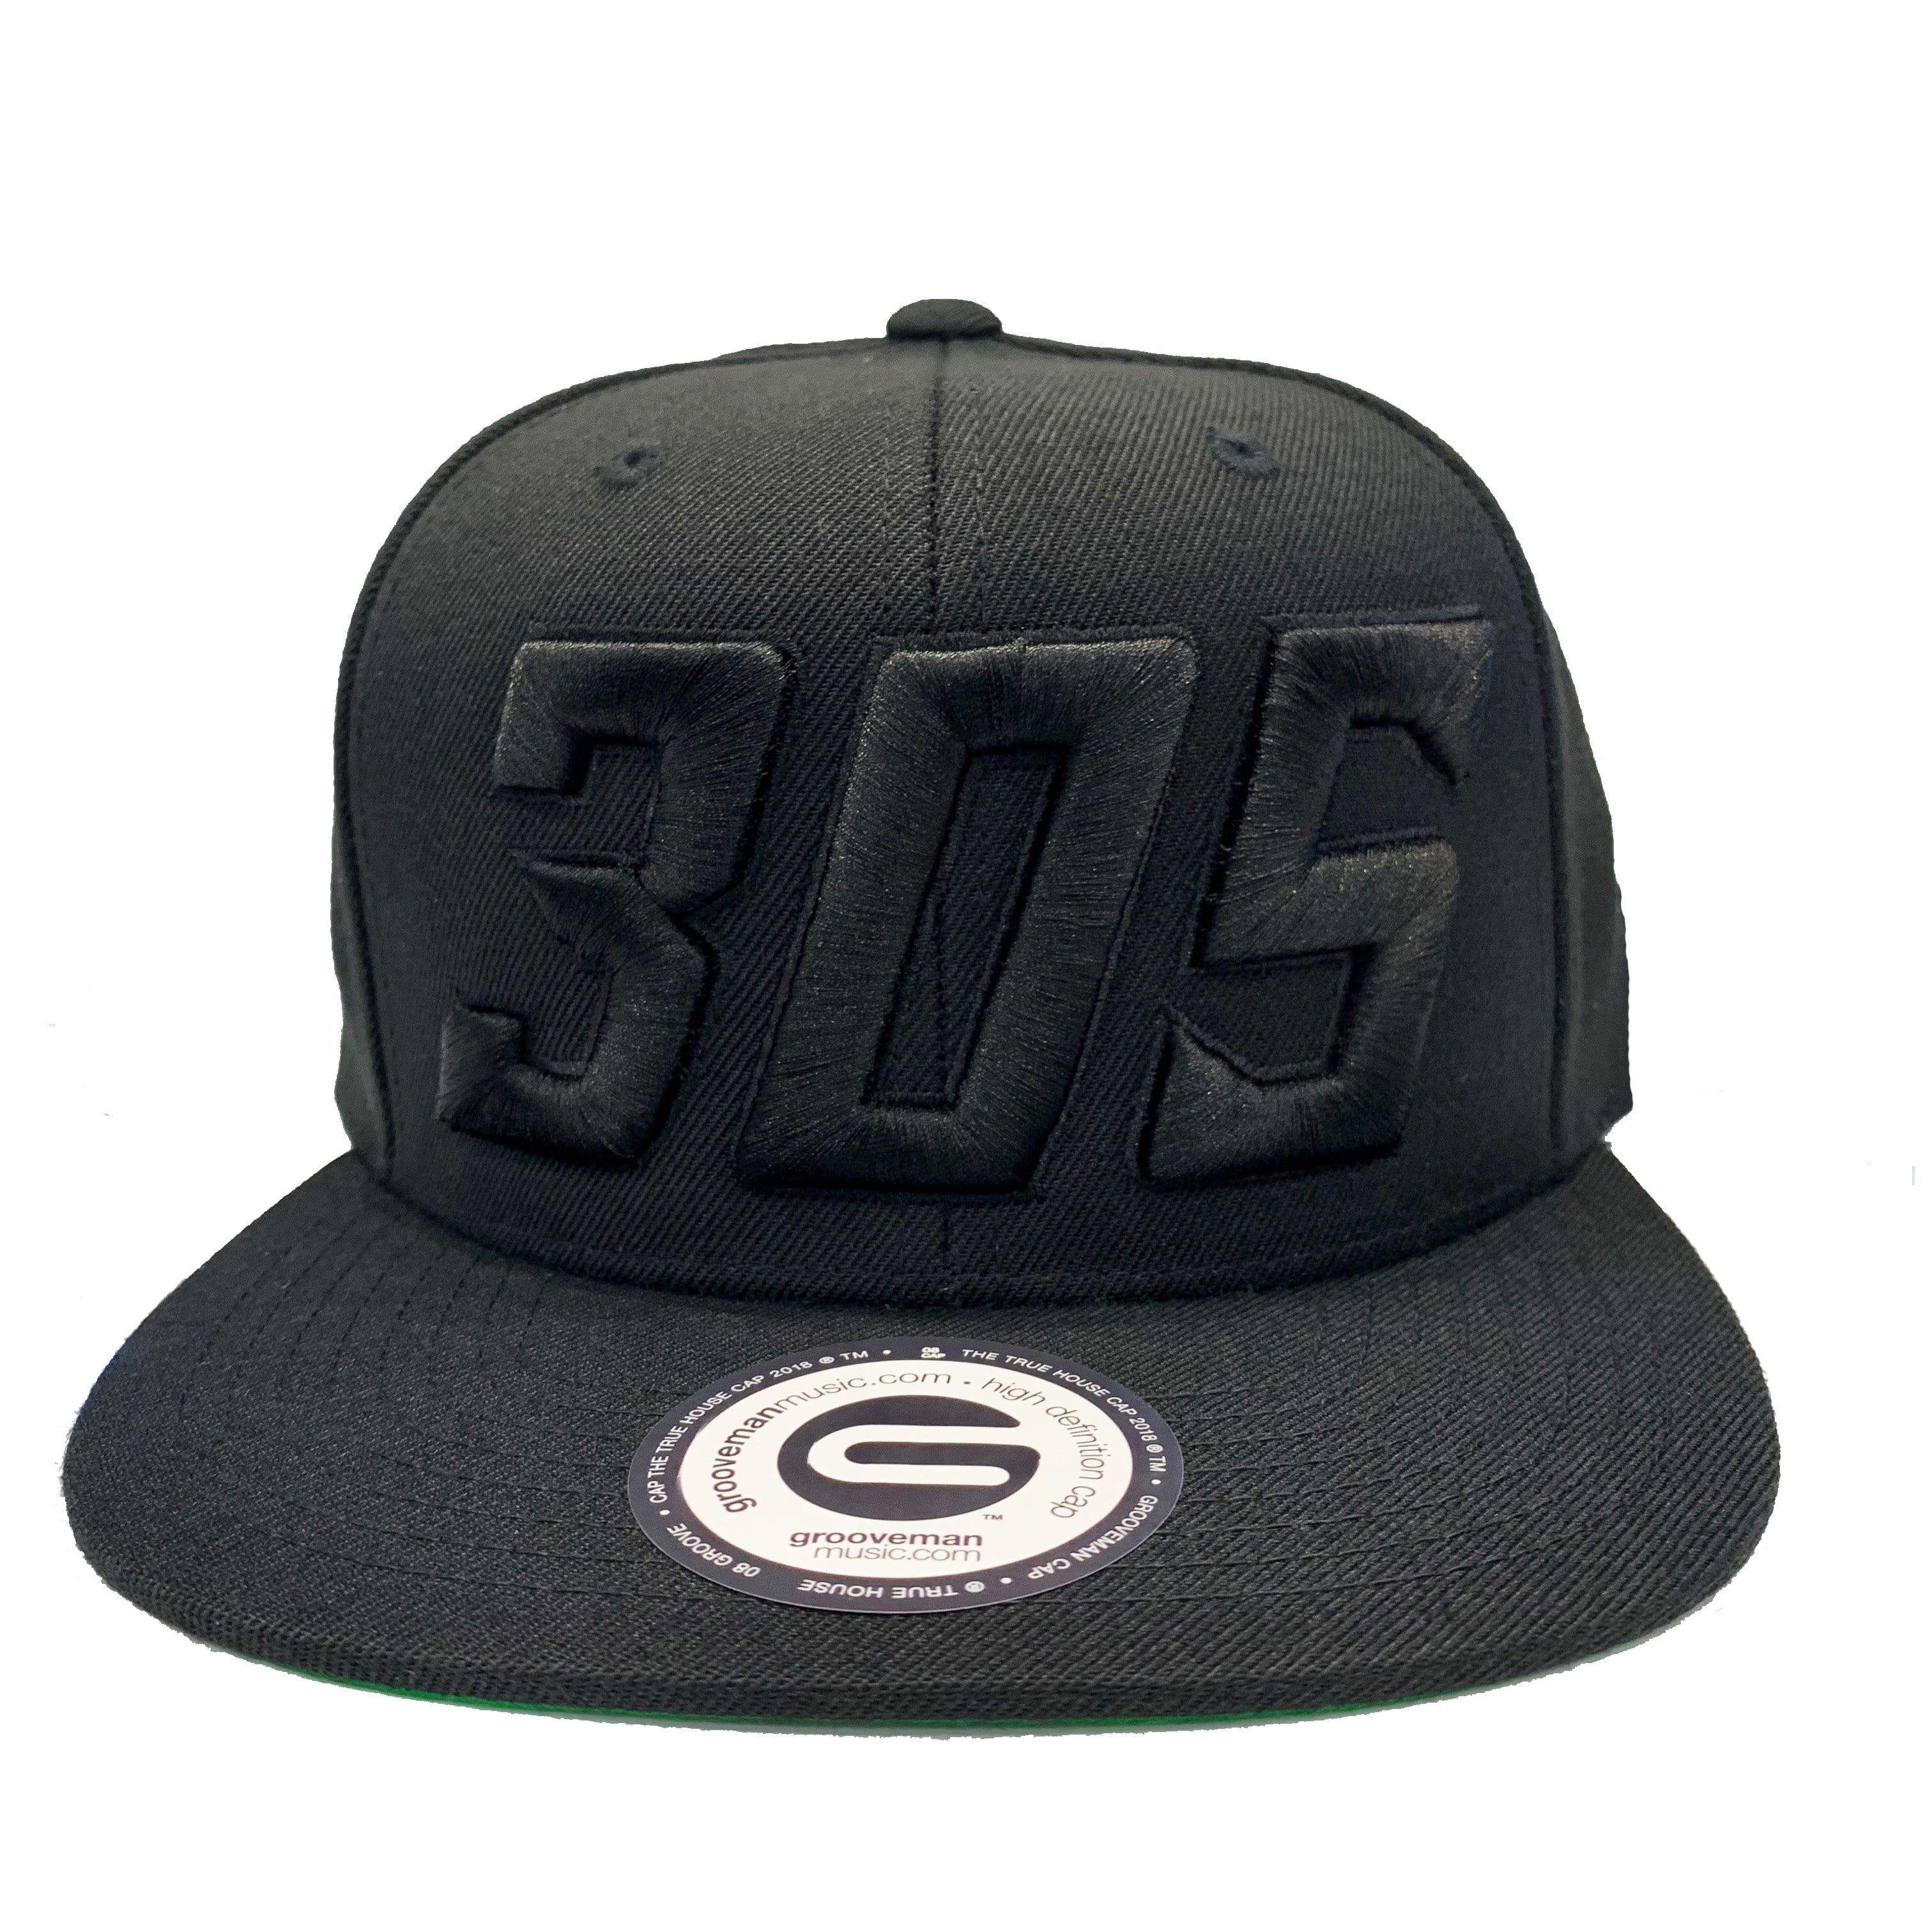 Grooveman Music Hats One Size / Black 305 Snapback Cap